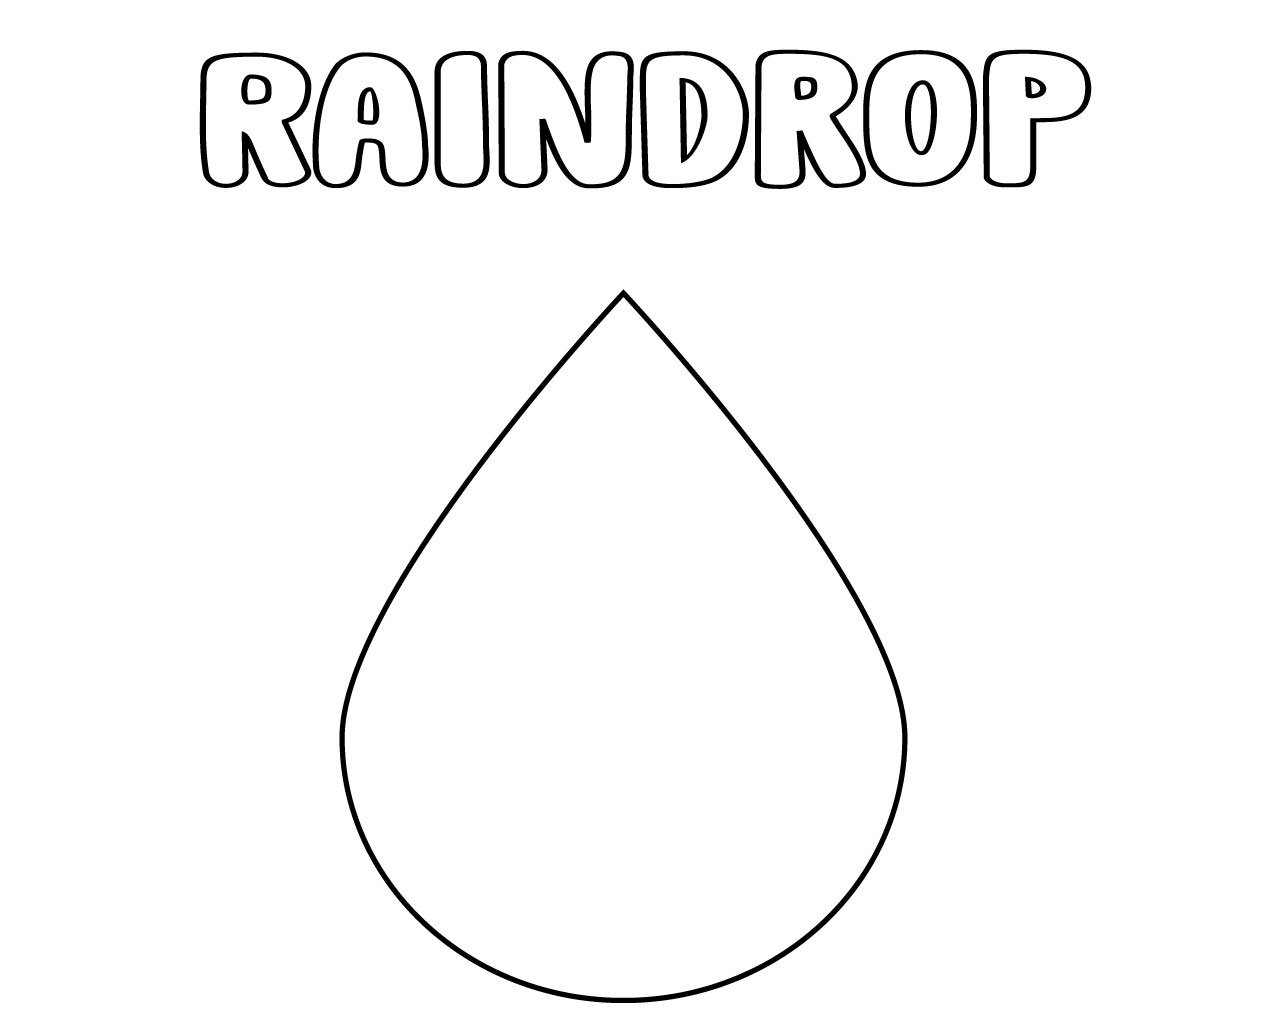 Raindrop Coloring Pages Raindrop Coloring Pages Printable Online